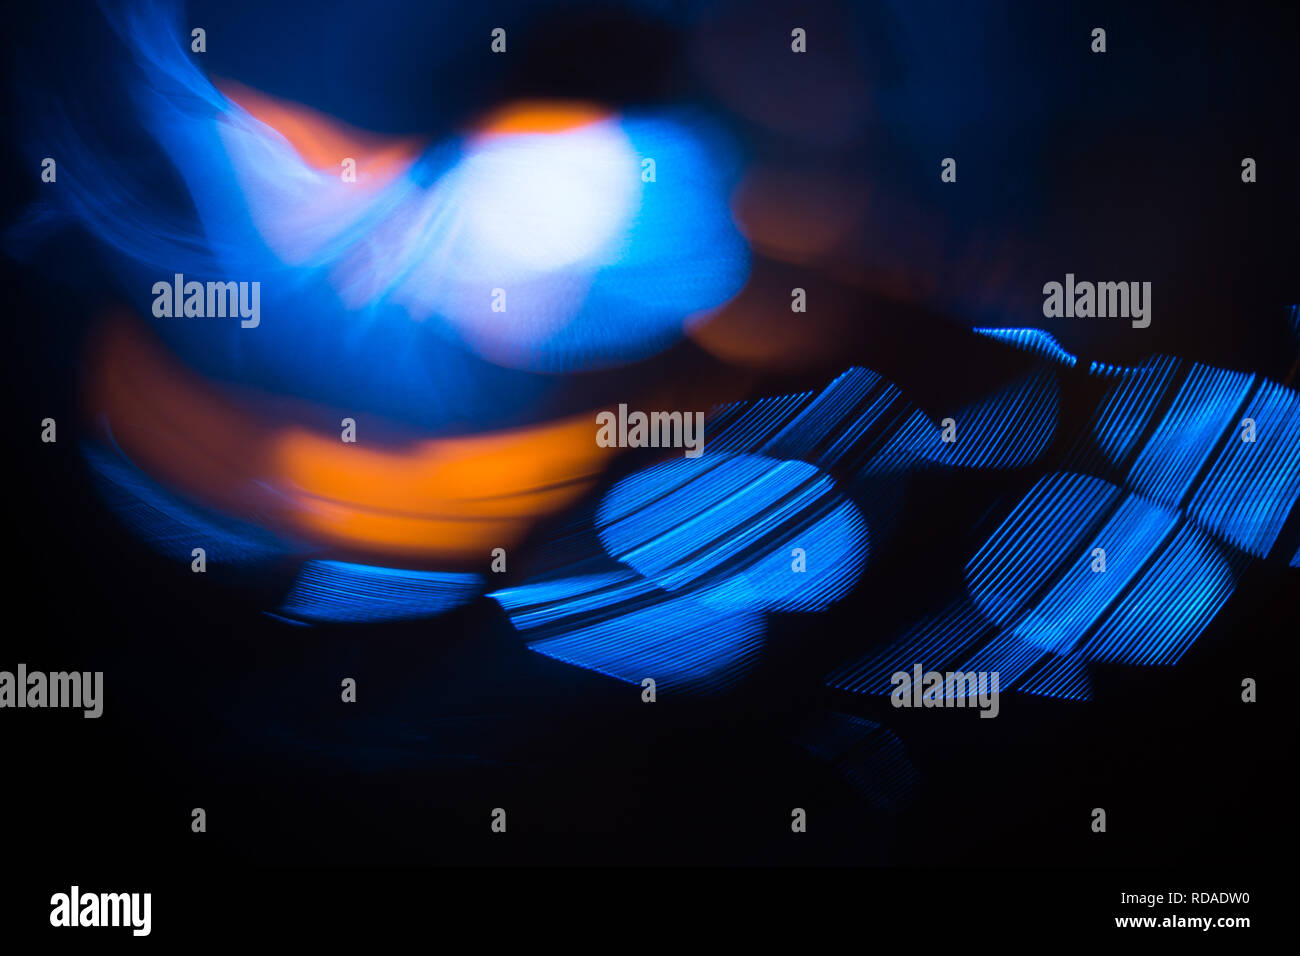 Foto astratte di offuscata di sorgenti di luce in arancione e blu. Foto Stock